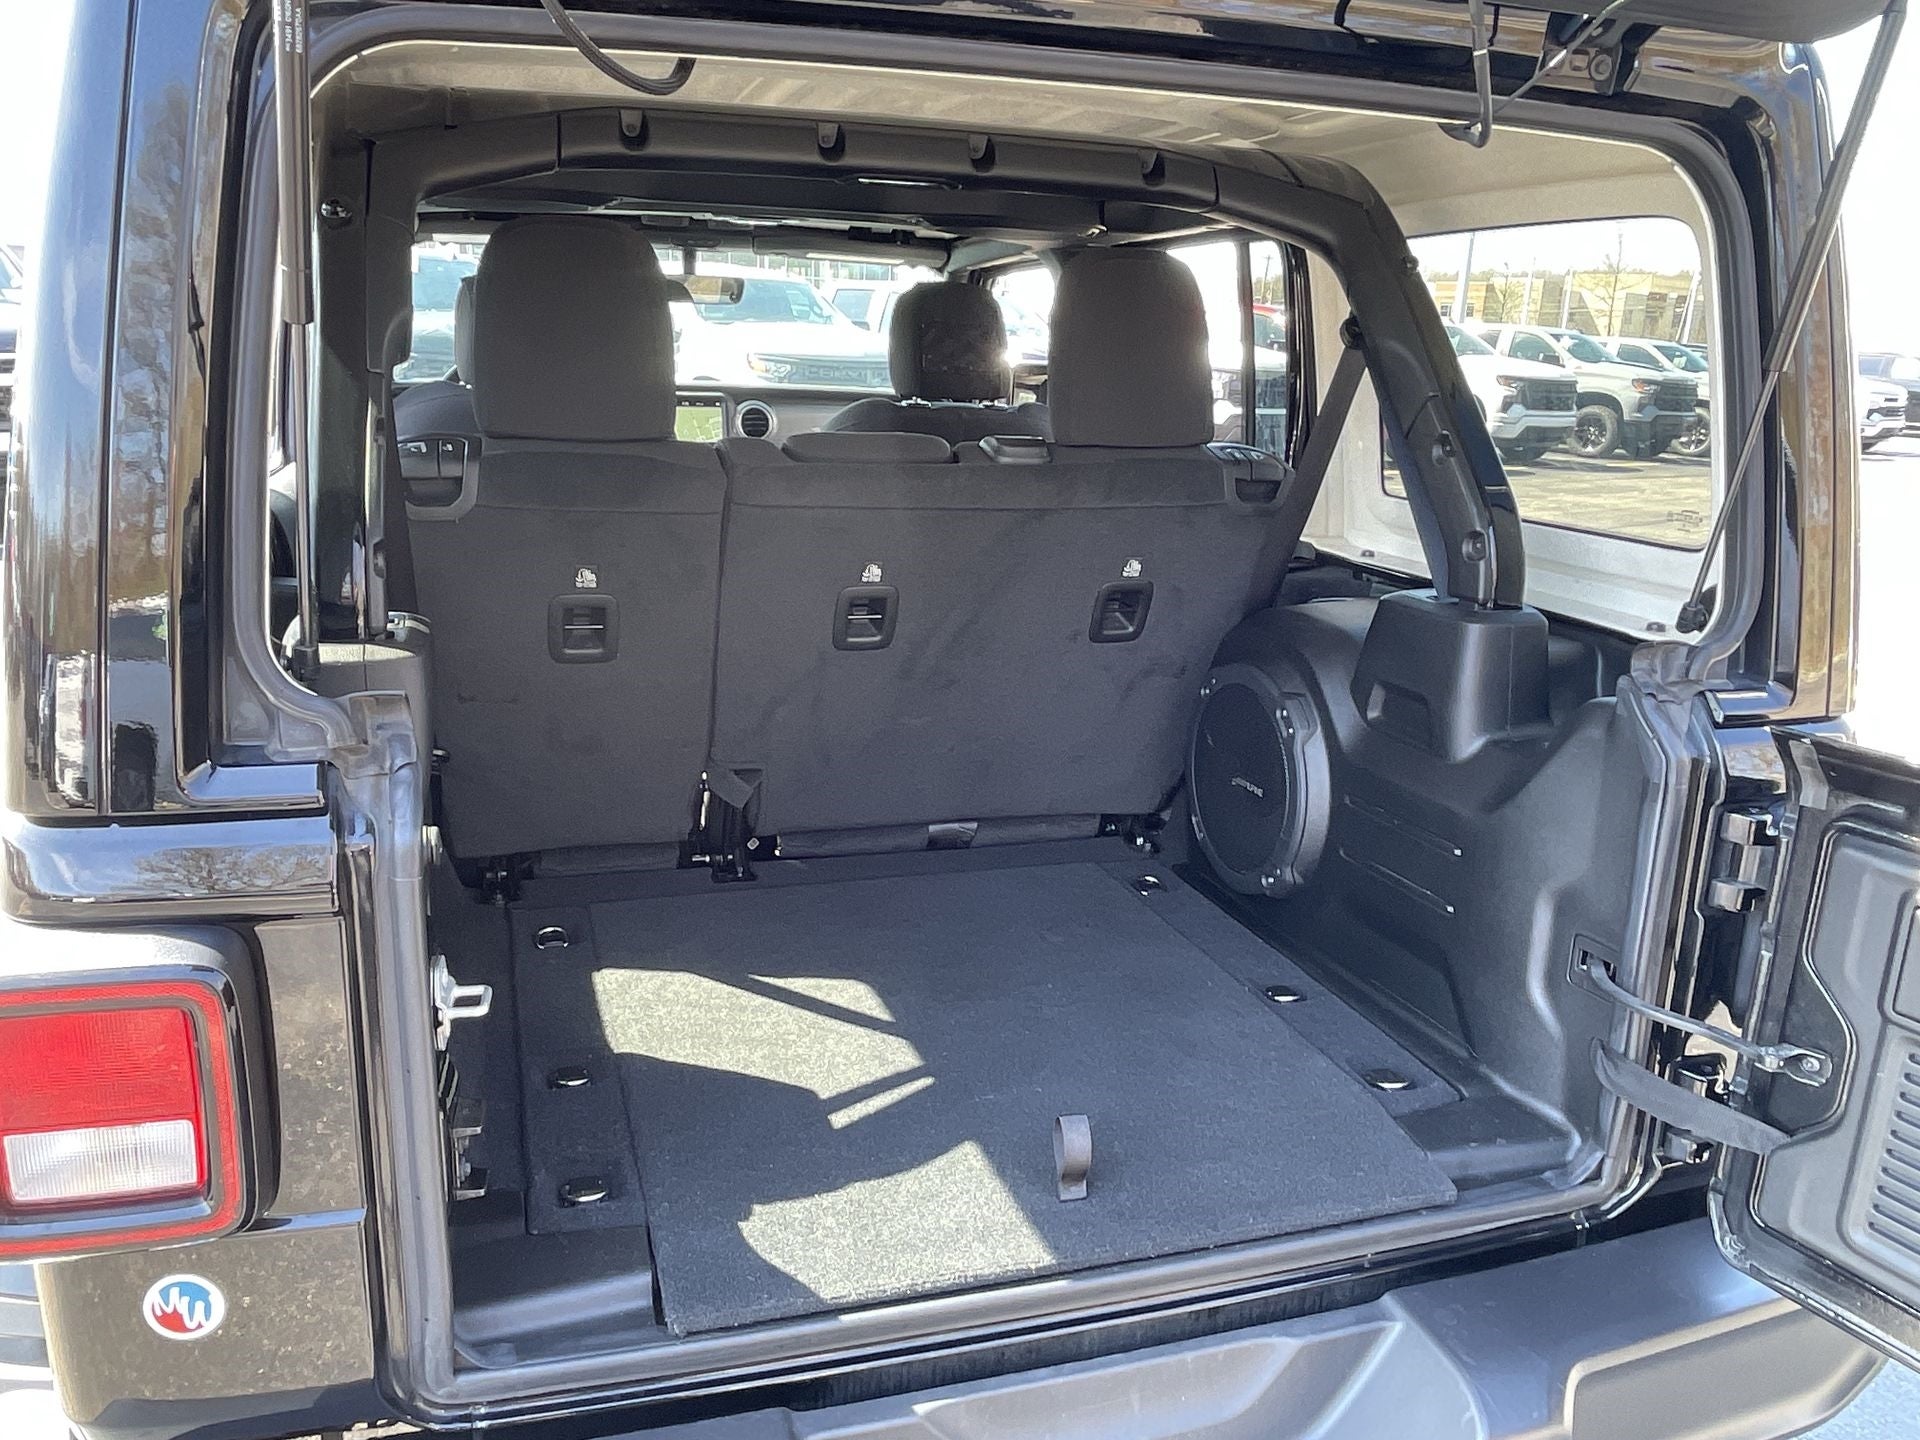 2022 Jeep Wrangler Unlimited Sahara 4x4